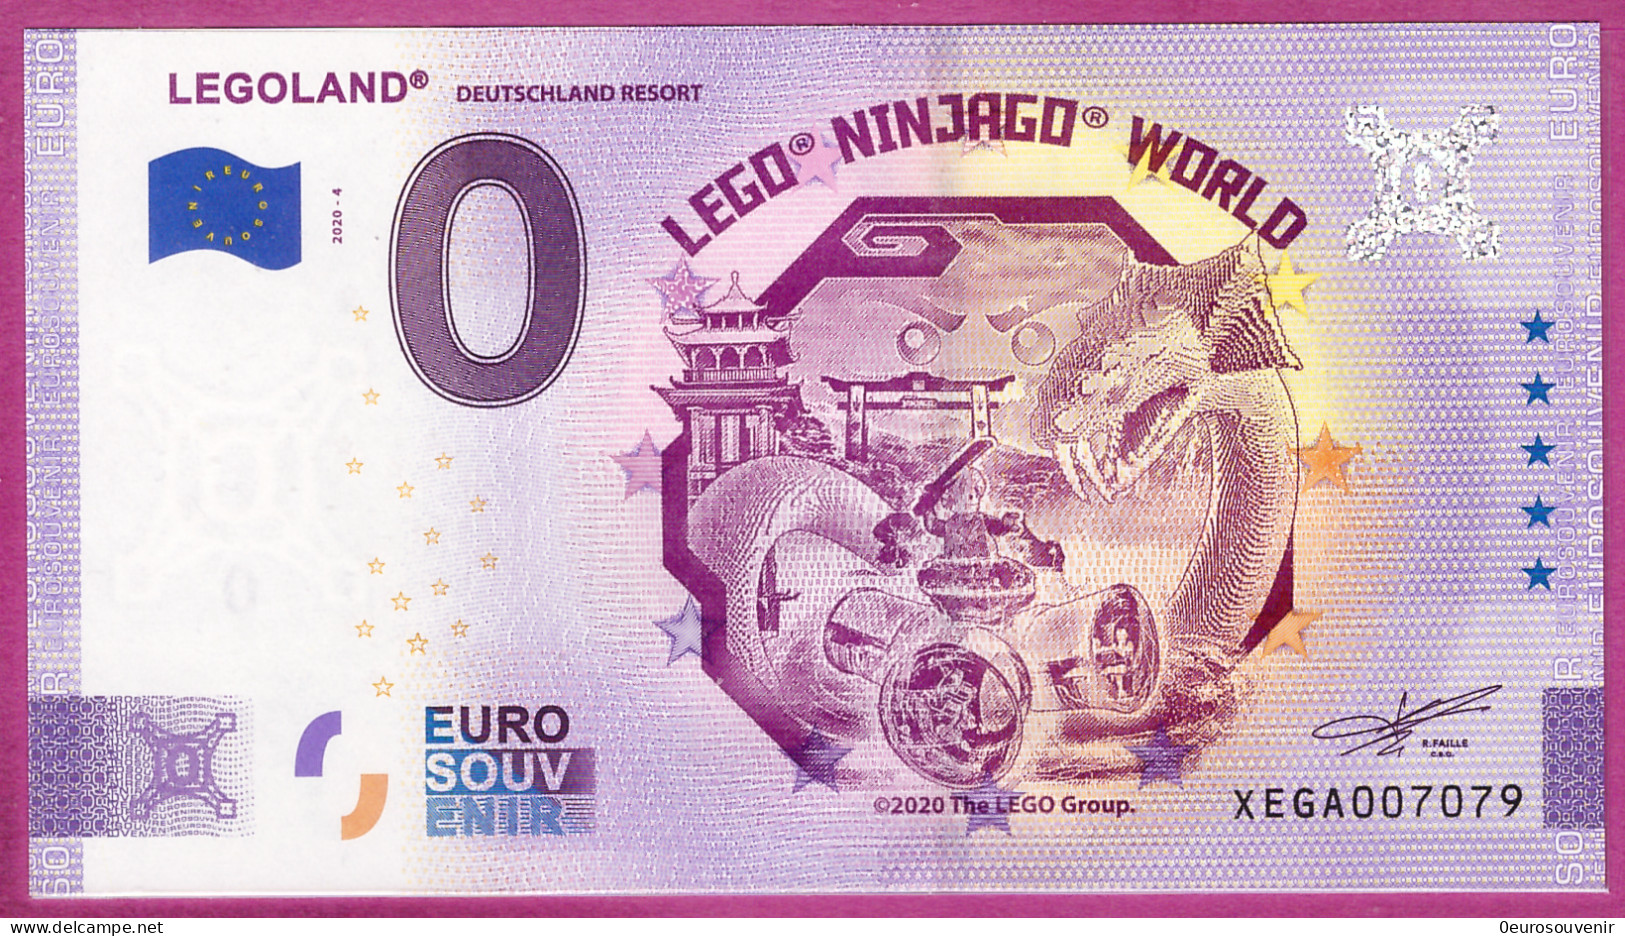 0-Euro XEGA 2020-4 FEHLDRUCK ANNIVERSARY LEGOLAND DEUTSCHLAND RESORT #7079 ! - Pruebas Privadas